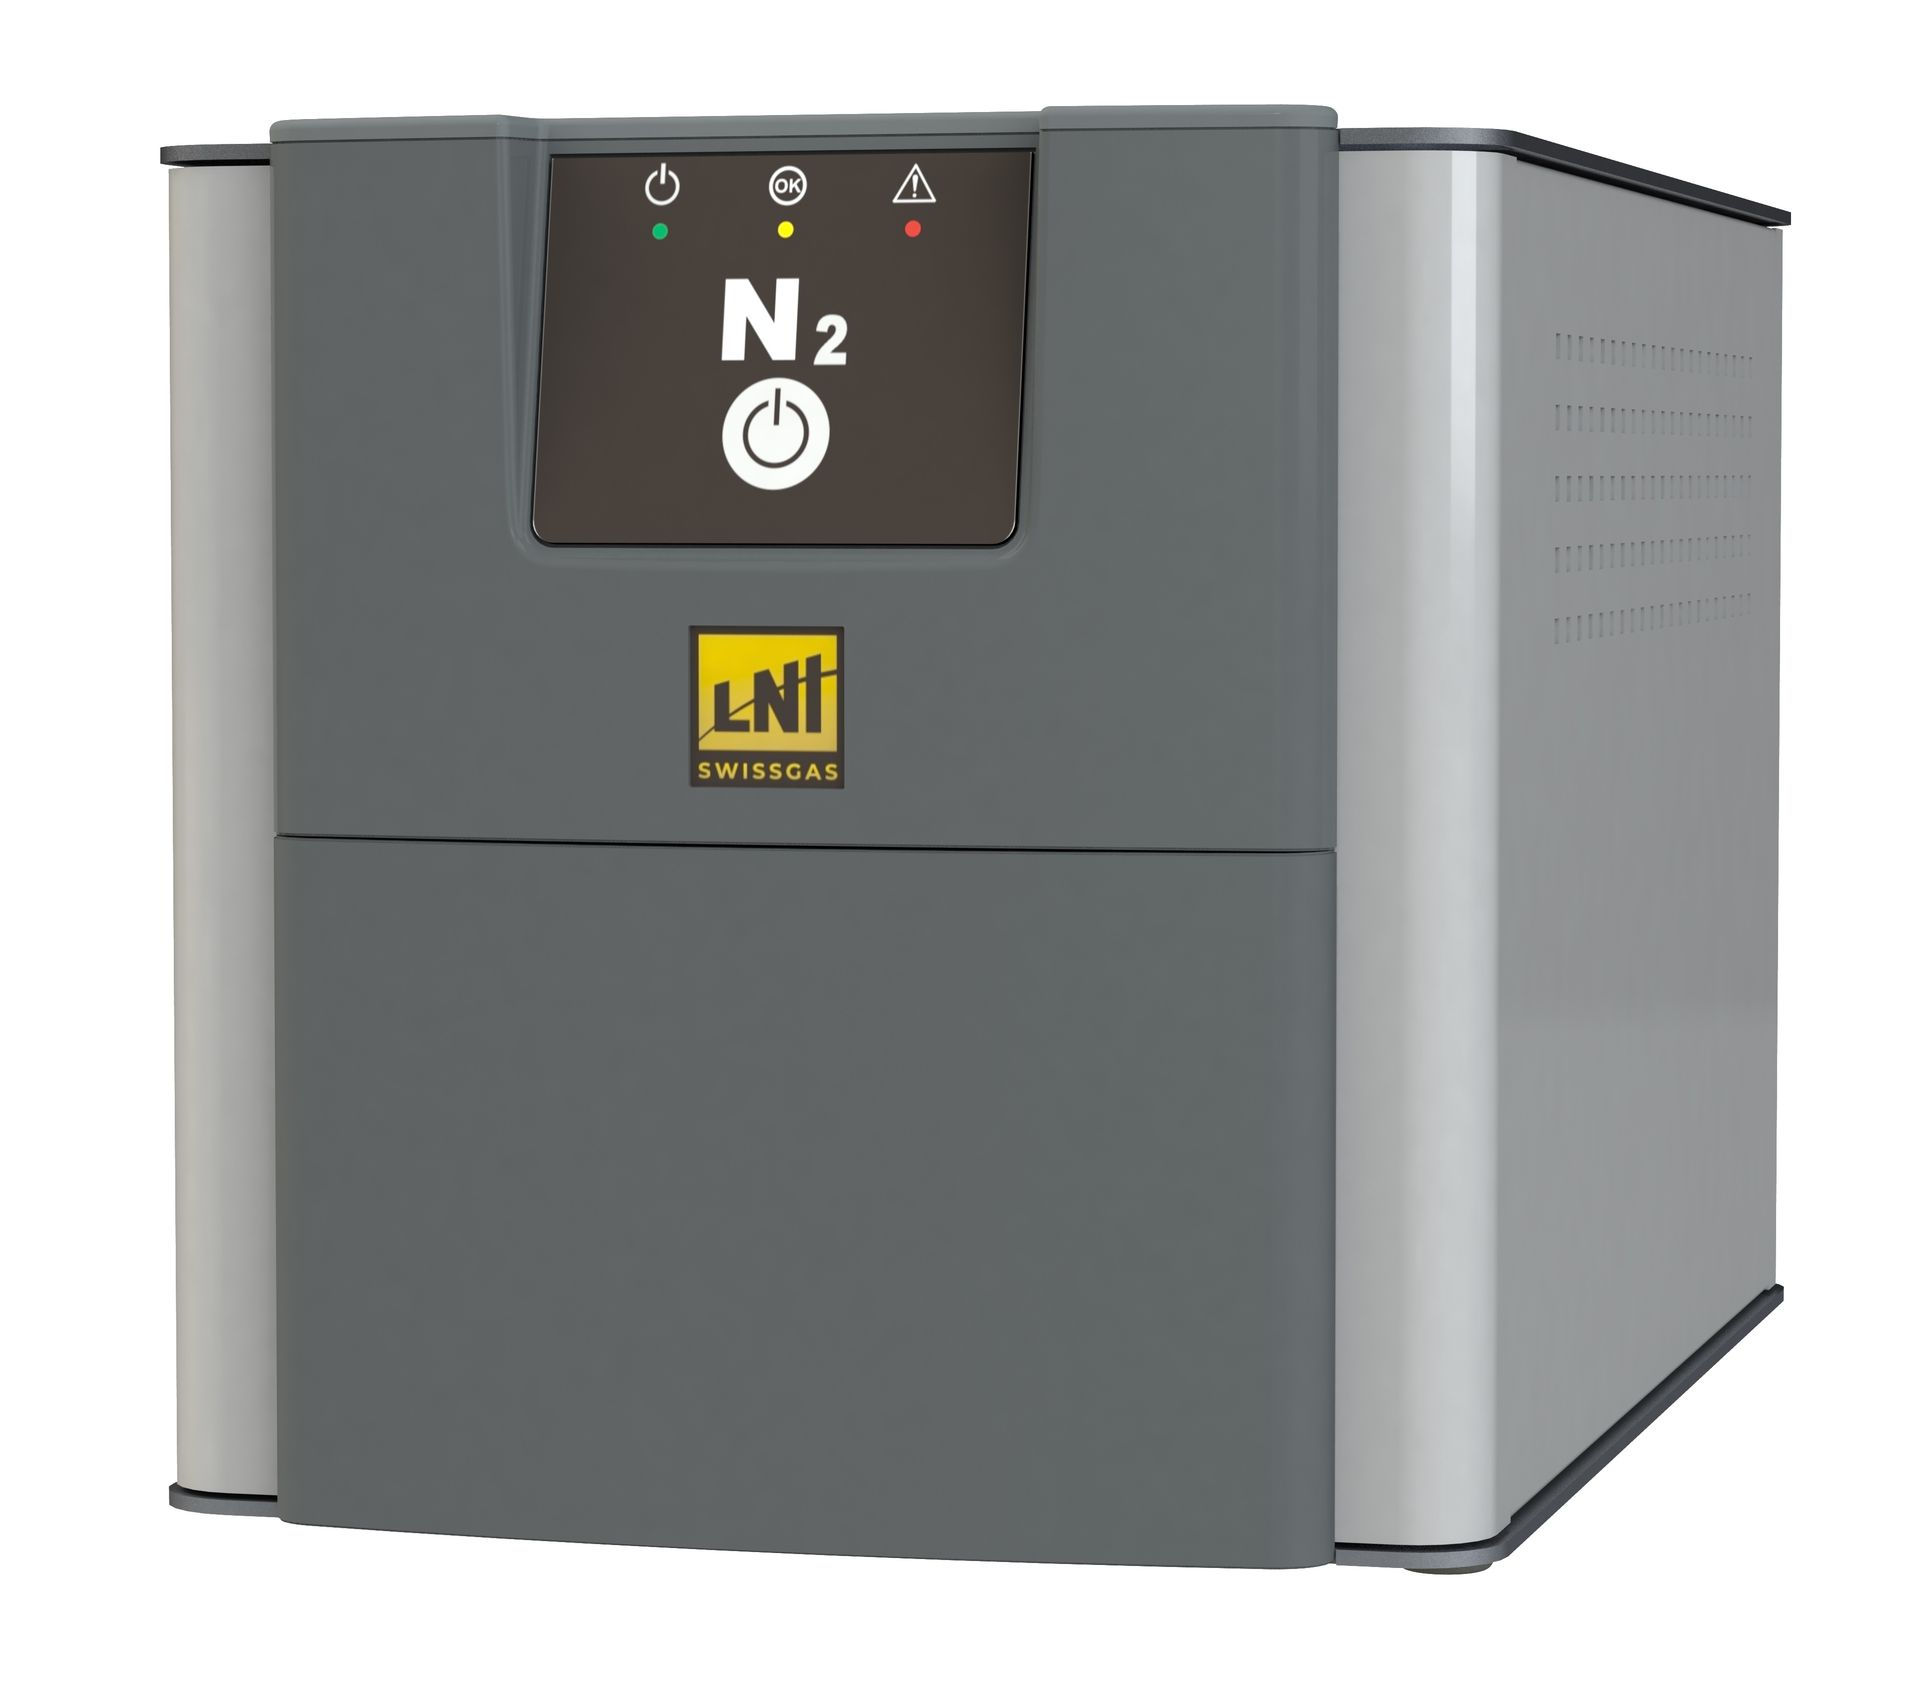 Nitrogen Generators